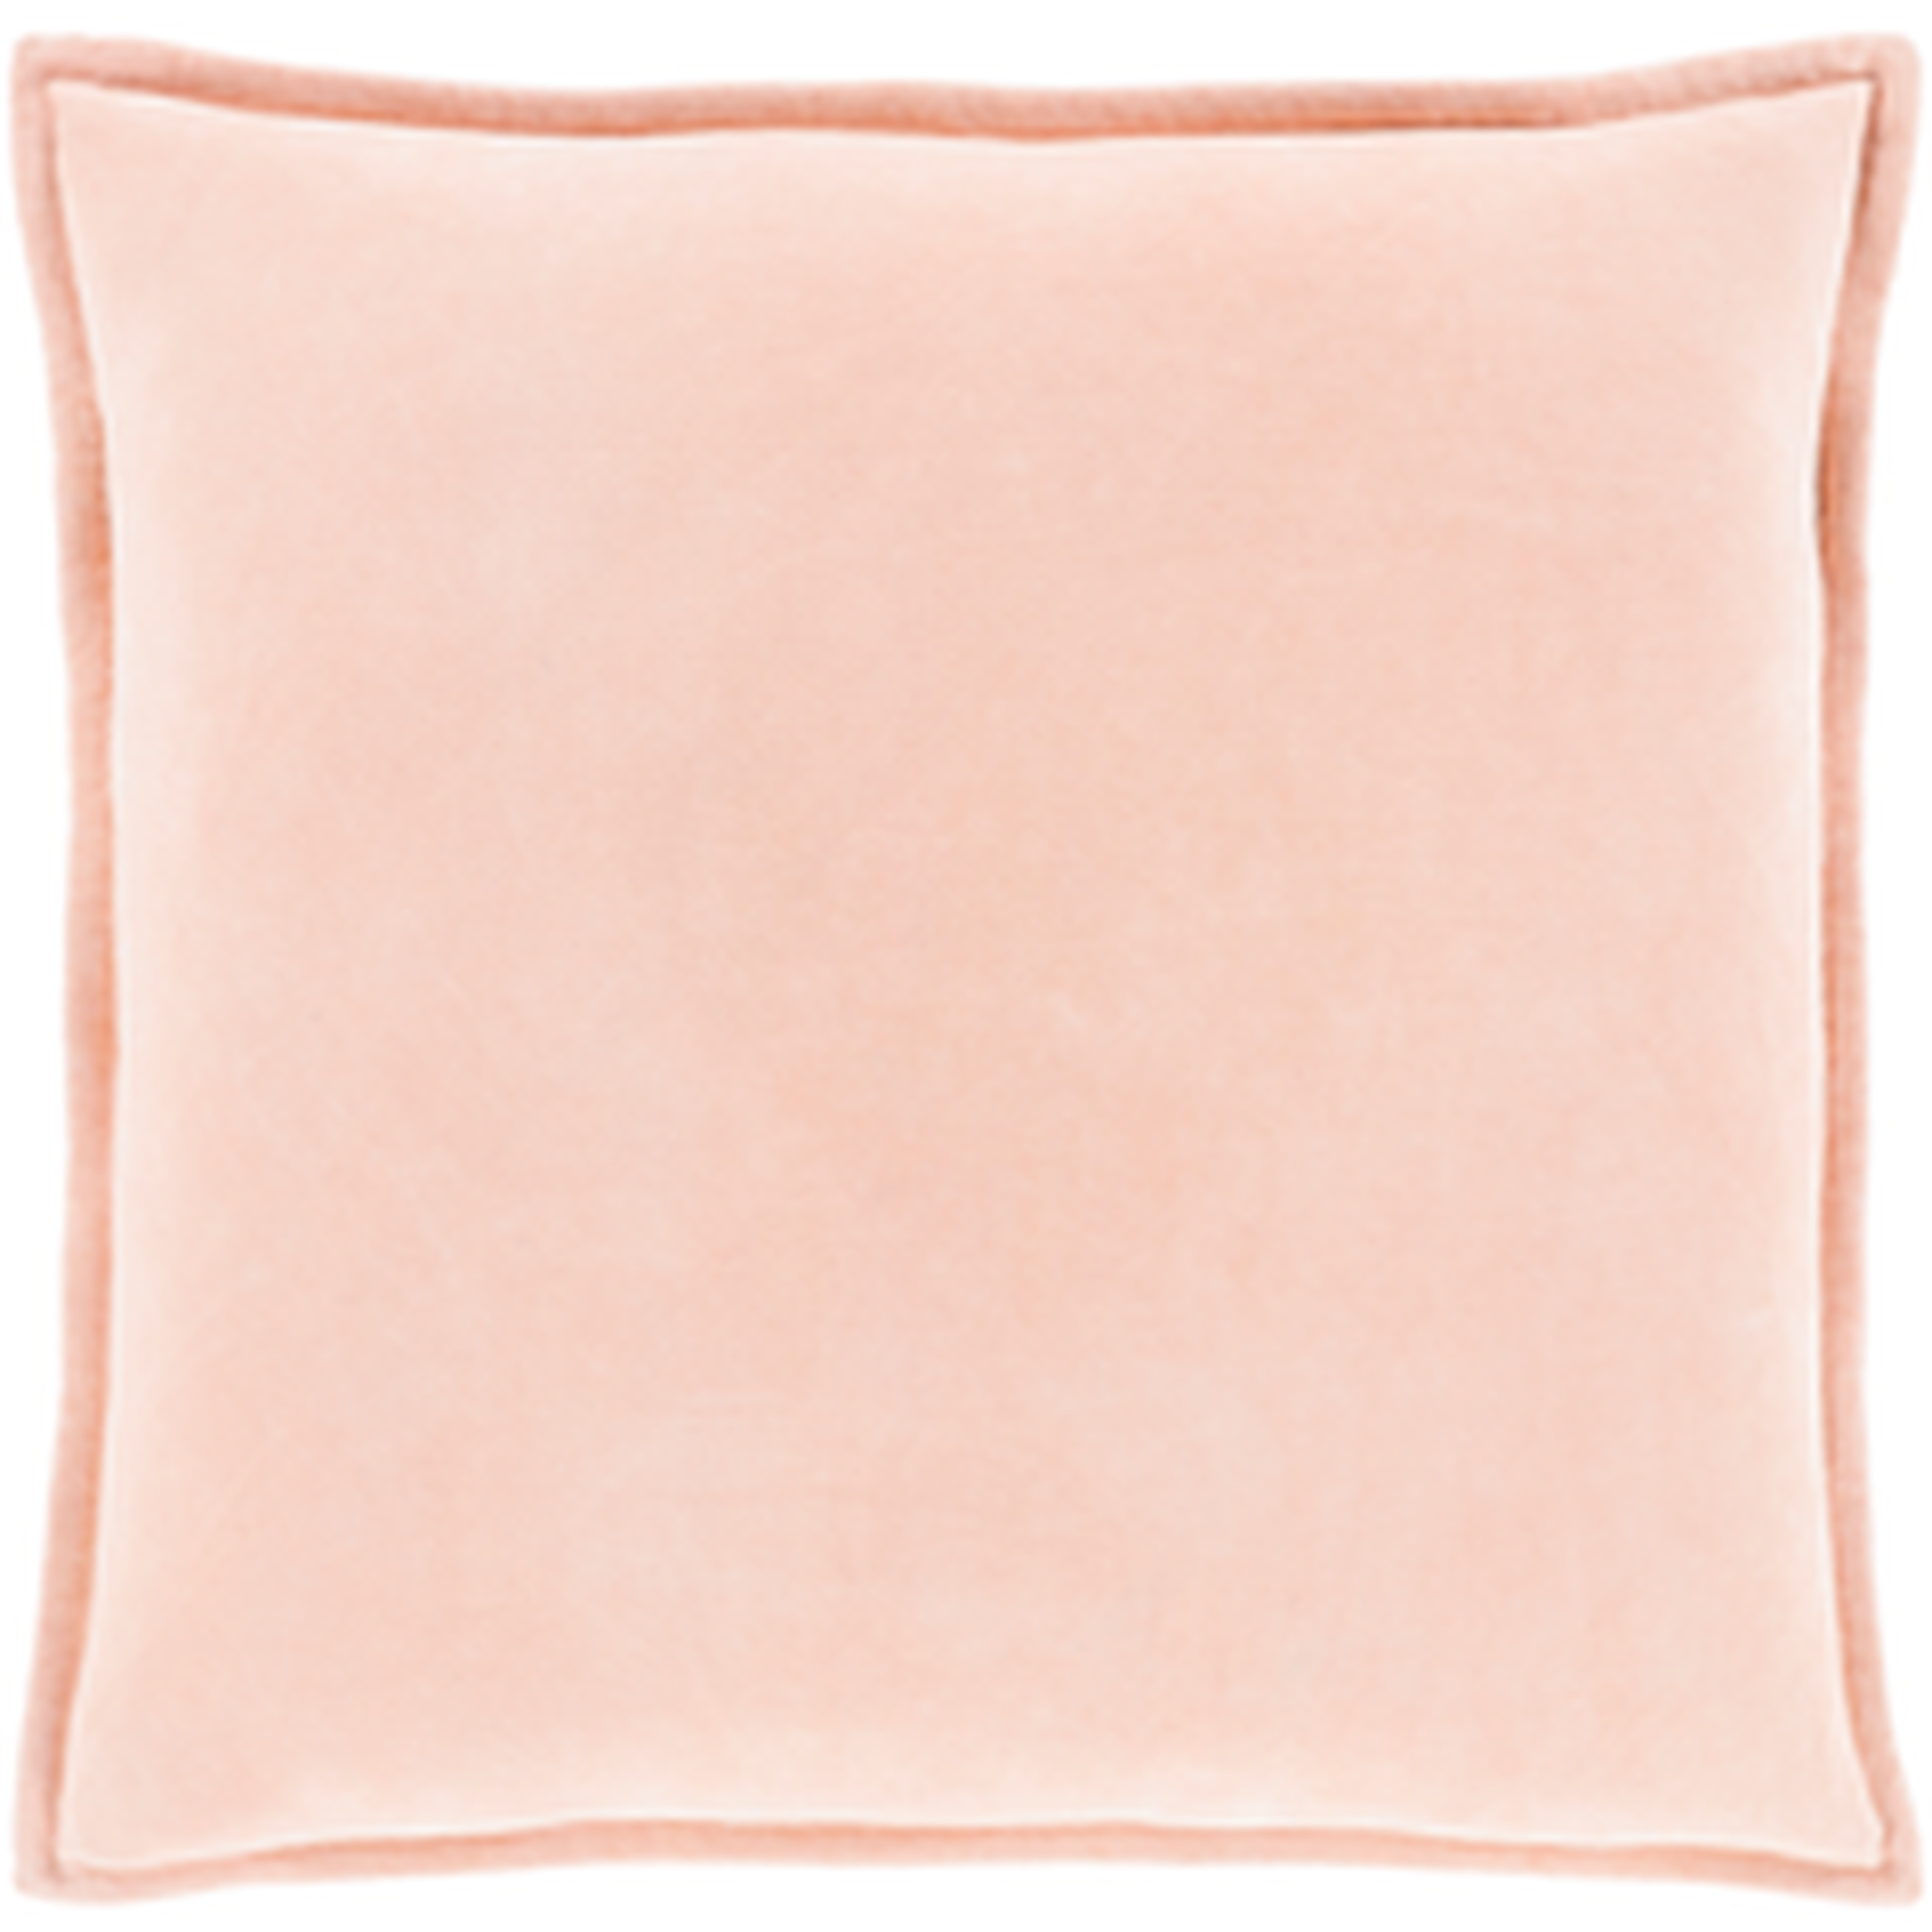 Cotton Velvet CV-029 - 20" x 20"  Pillow Shell with Polyester Insert - Surya